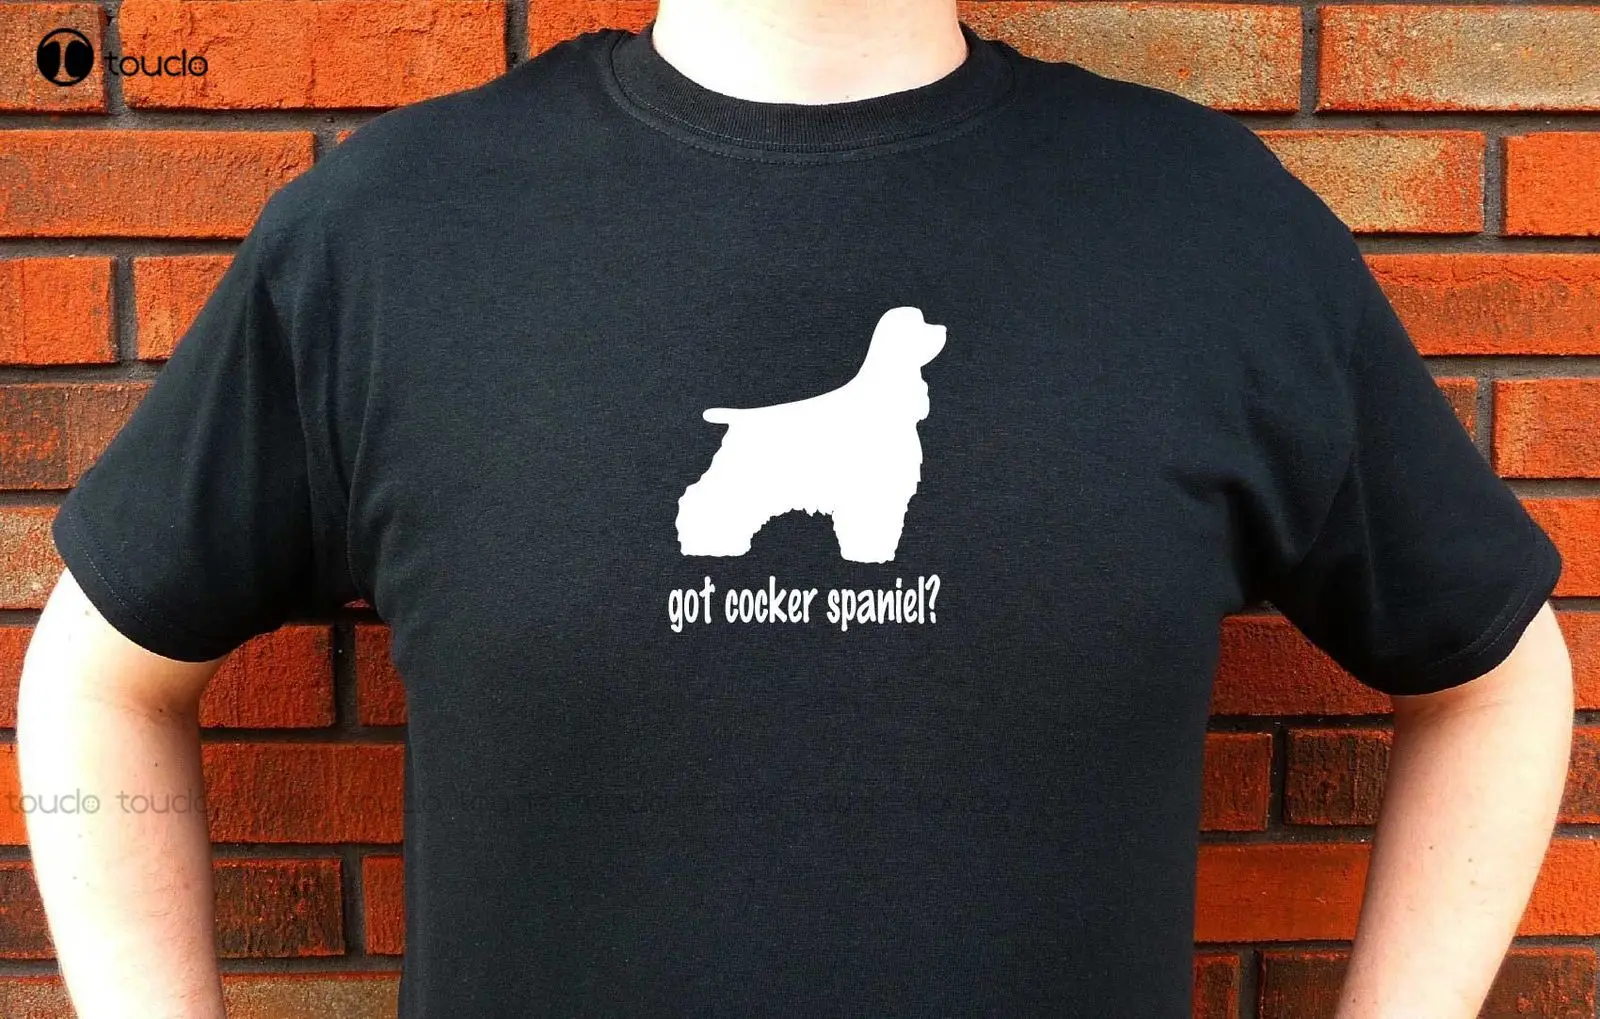 

Tshirt Brand Male Short Sleeve Cool T-Shirts Designs Best Selling Men Got Cocker Spaniel Spaniels Dog Graphic Cool Shirts